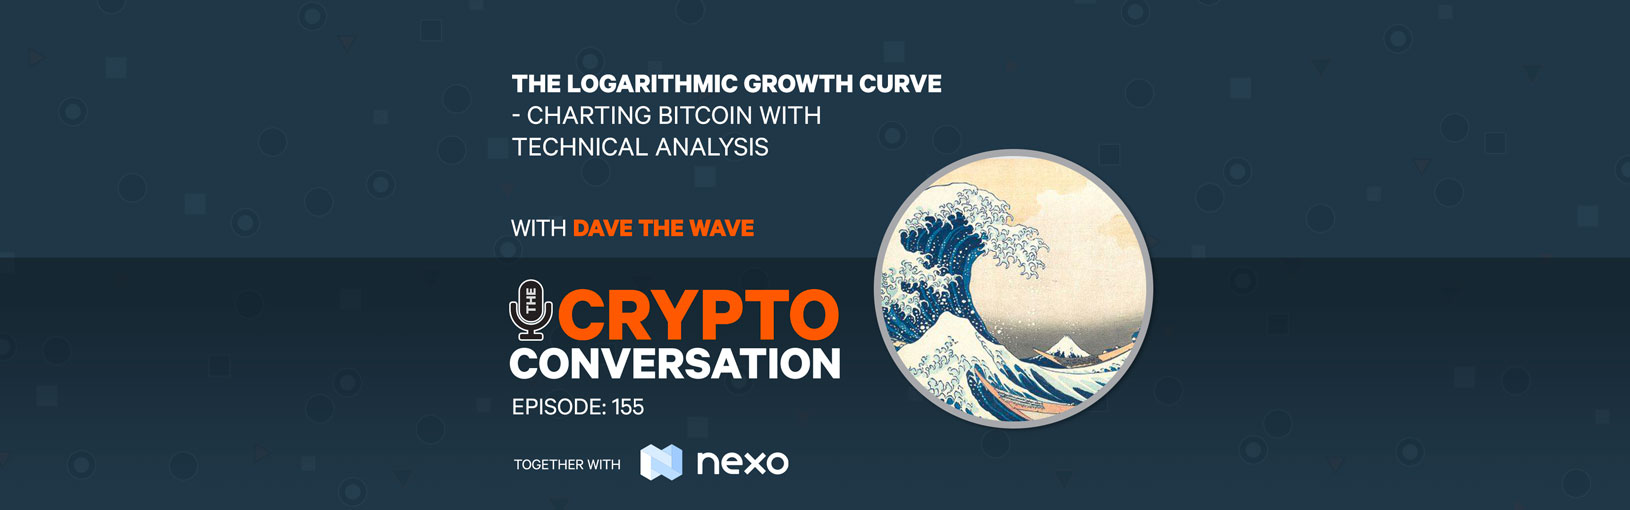 Dave the Wave – Bitcoin & the Logarithmic Growth Curve